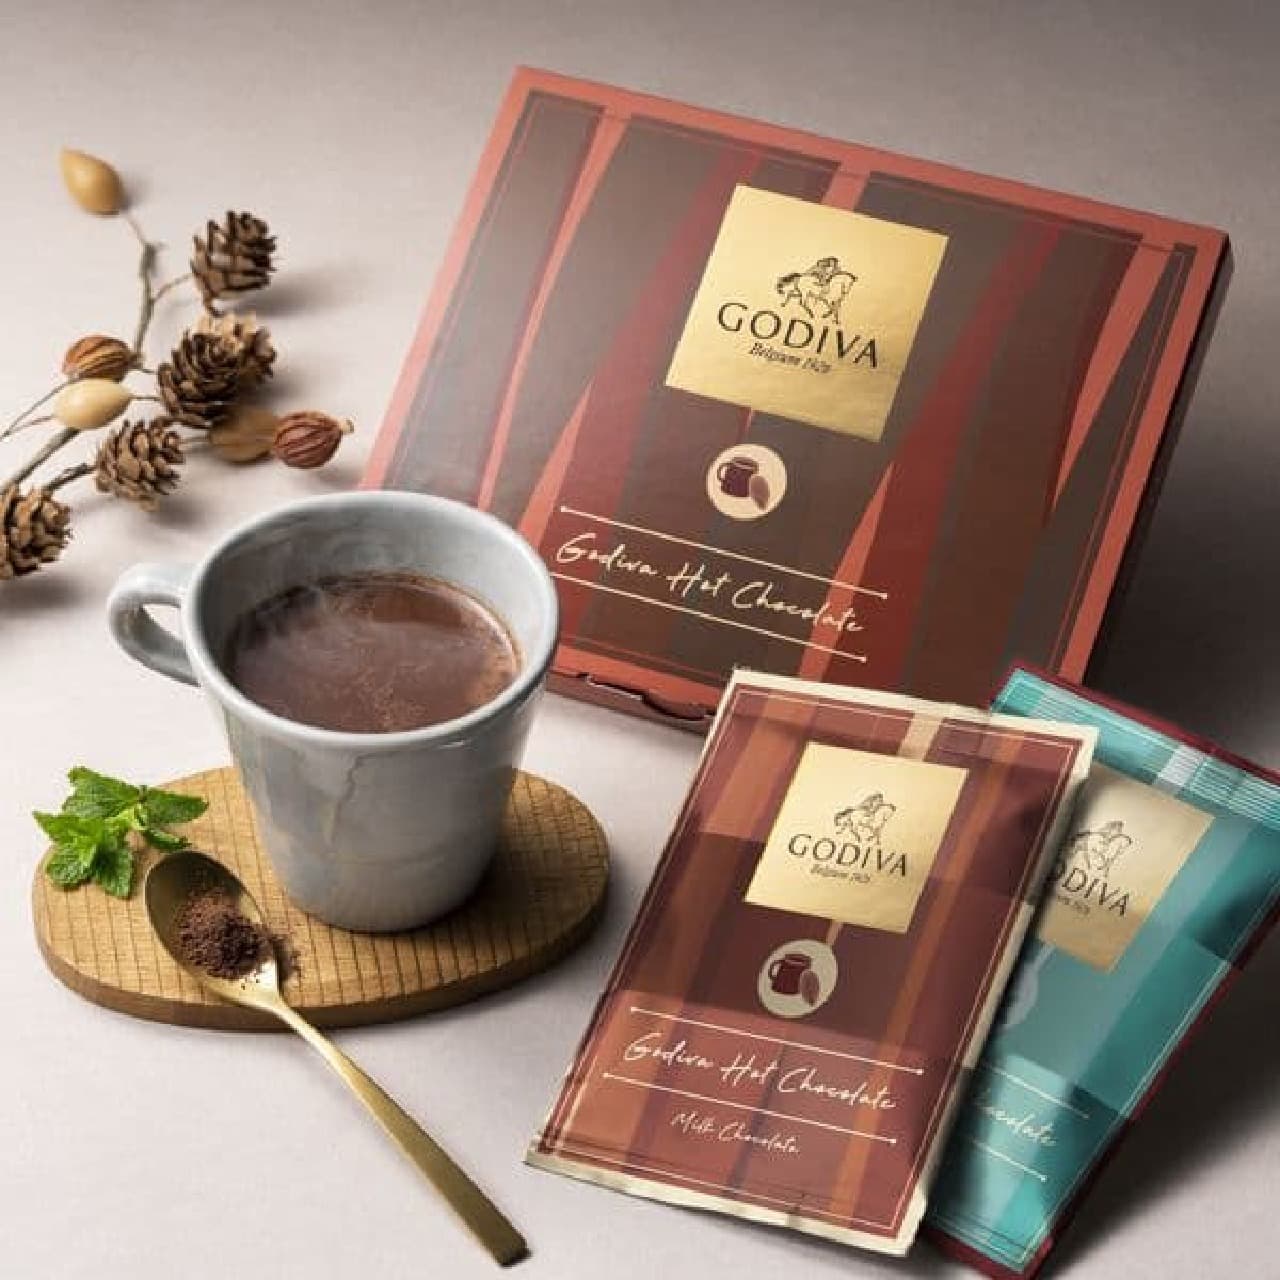 Godiva Shop "Godiva Hot Chocolate".